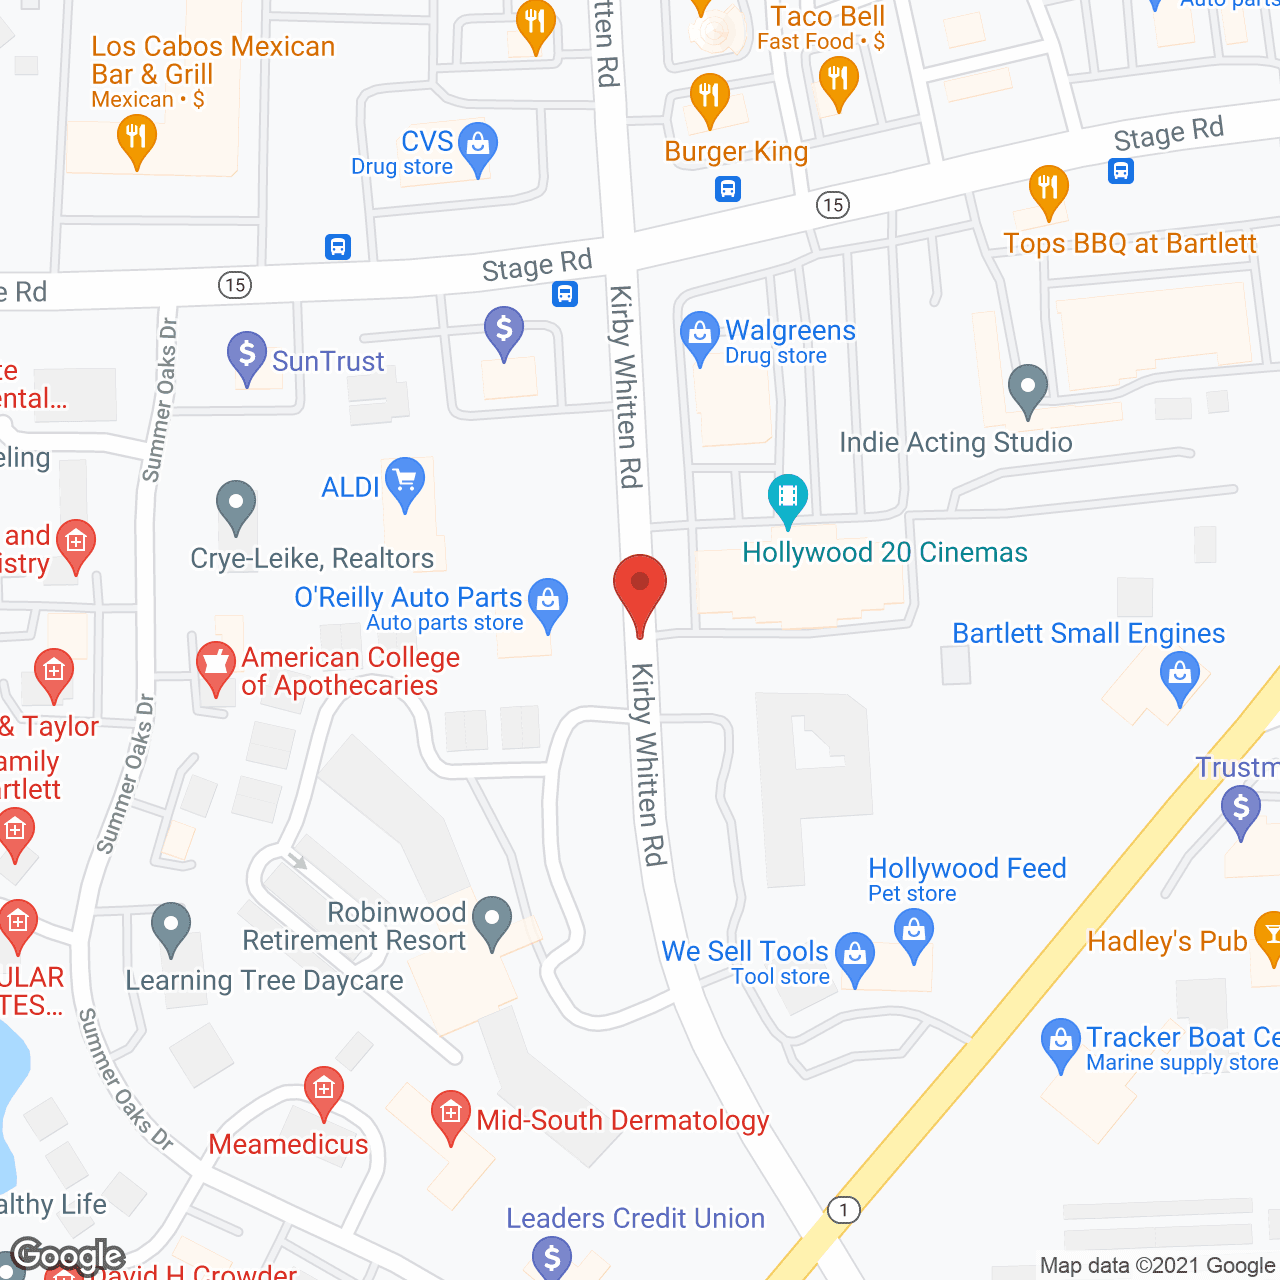 Robinwood Retirement Resort in google map